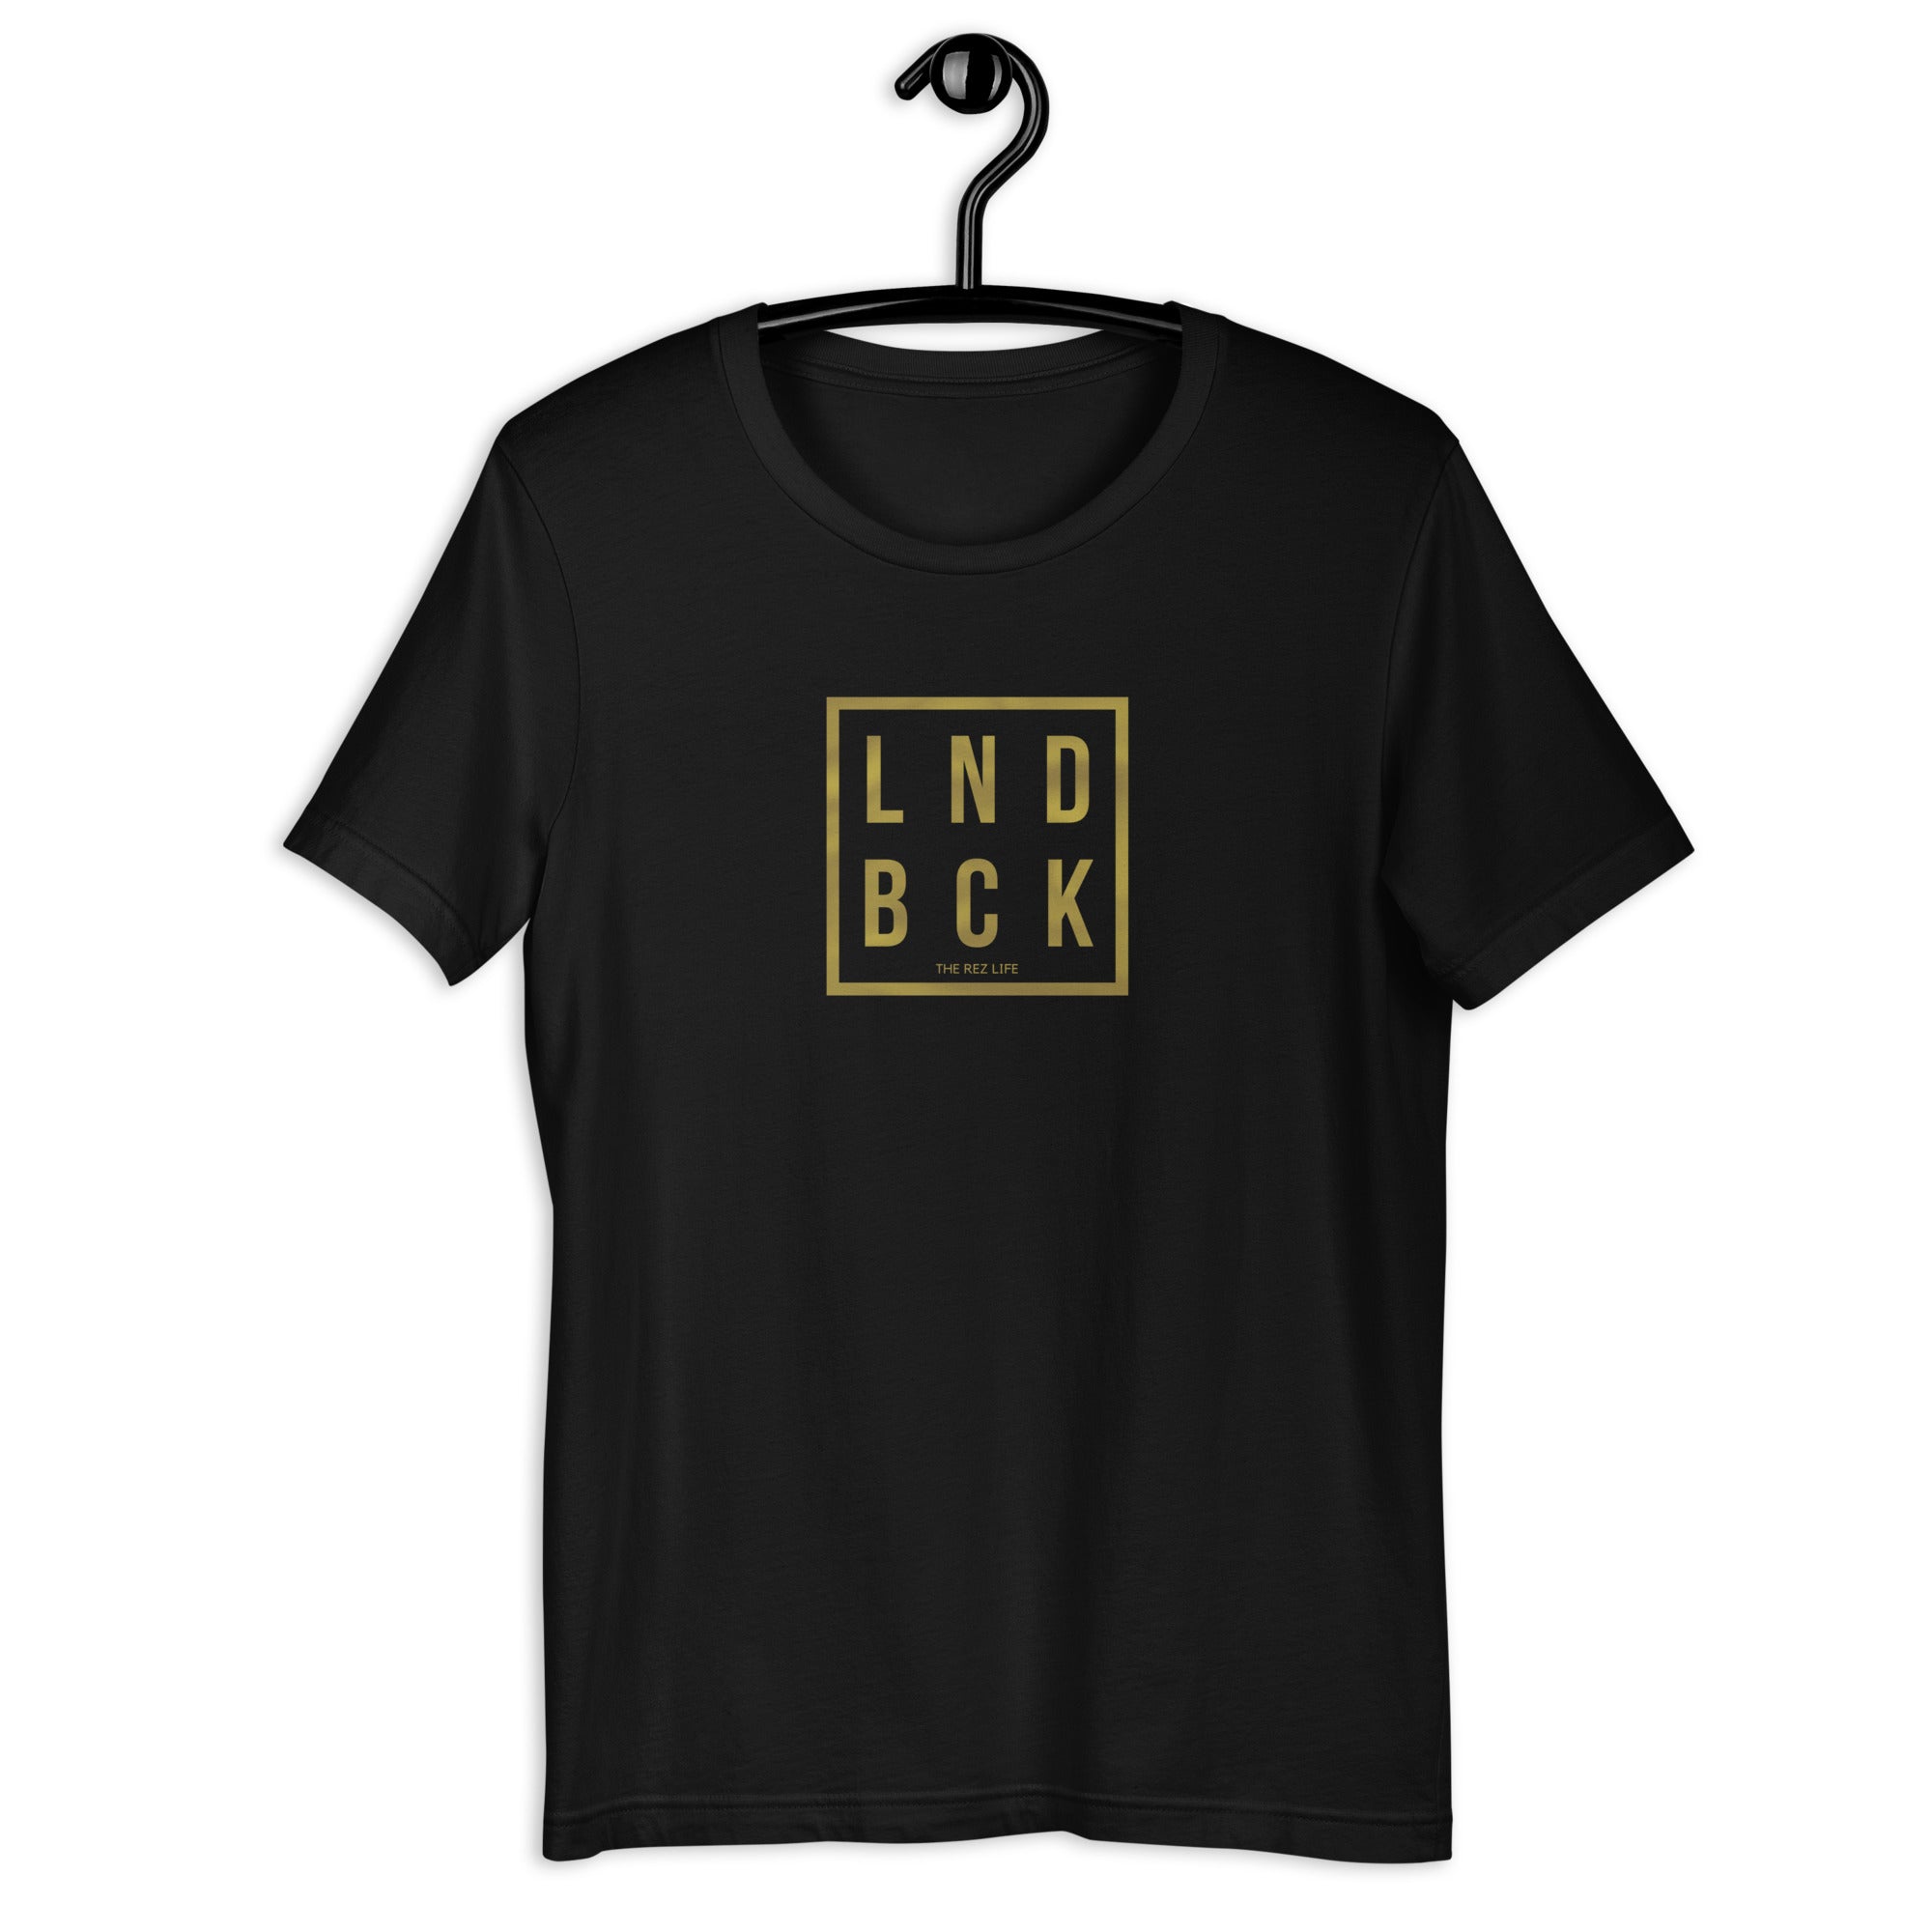 LND BCK Black & Gold